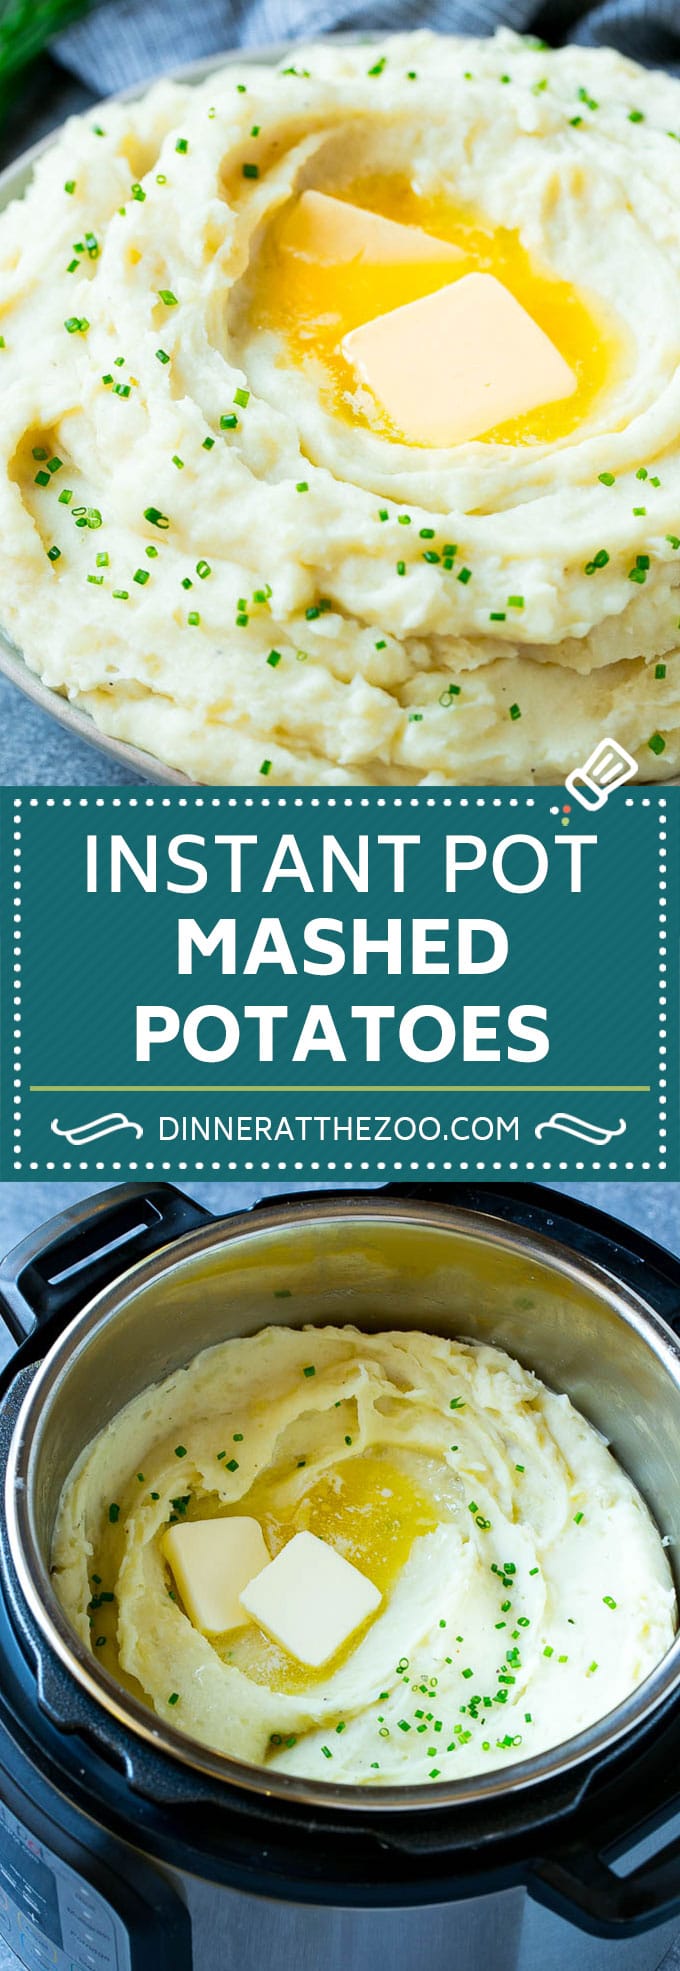 Instant Pot Mashed Potatoes Recipe | Pressure Cooker Mashed Potatoes | Easy Mashed Potatoes #potatoes #sidedish #instantpot #thanksgiving #dinner #dinneratthezoo